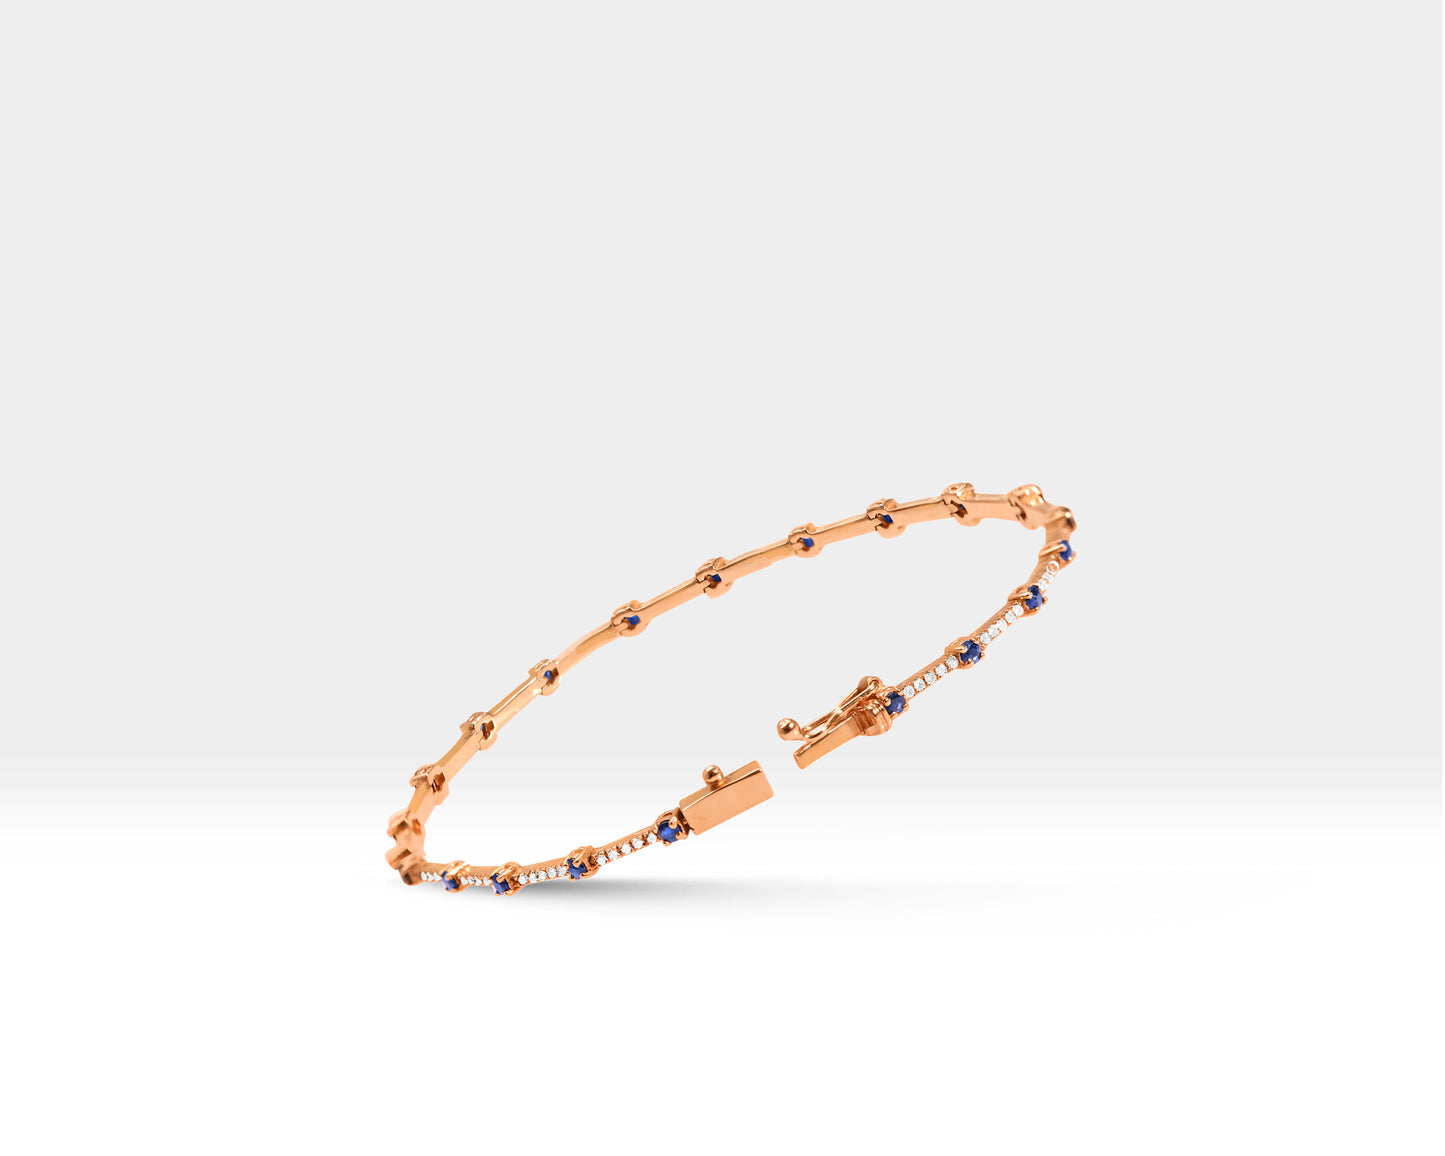 14K Solid Gold Tennis Bracelet Waterway Gold Chain Bracelet with Diamond-Sapphire Wedding Gifts